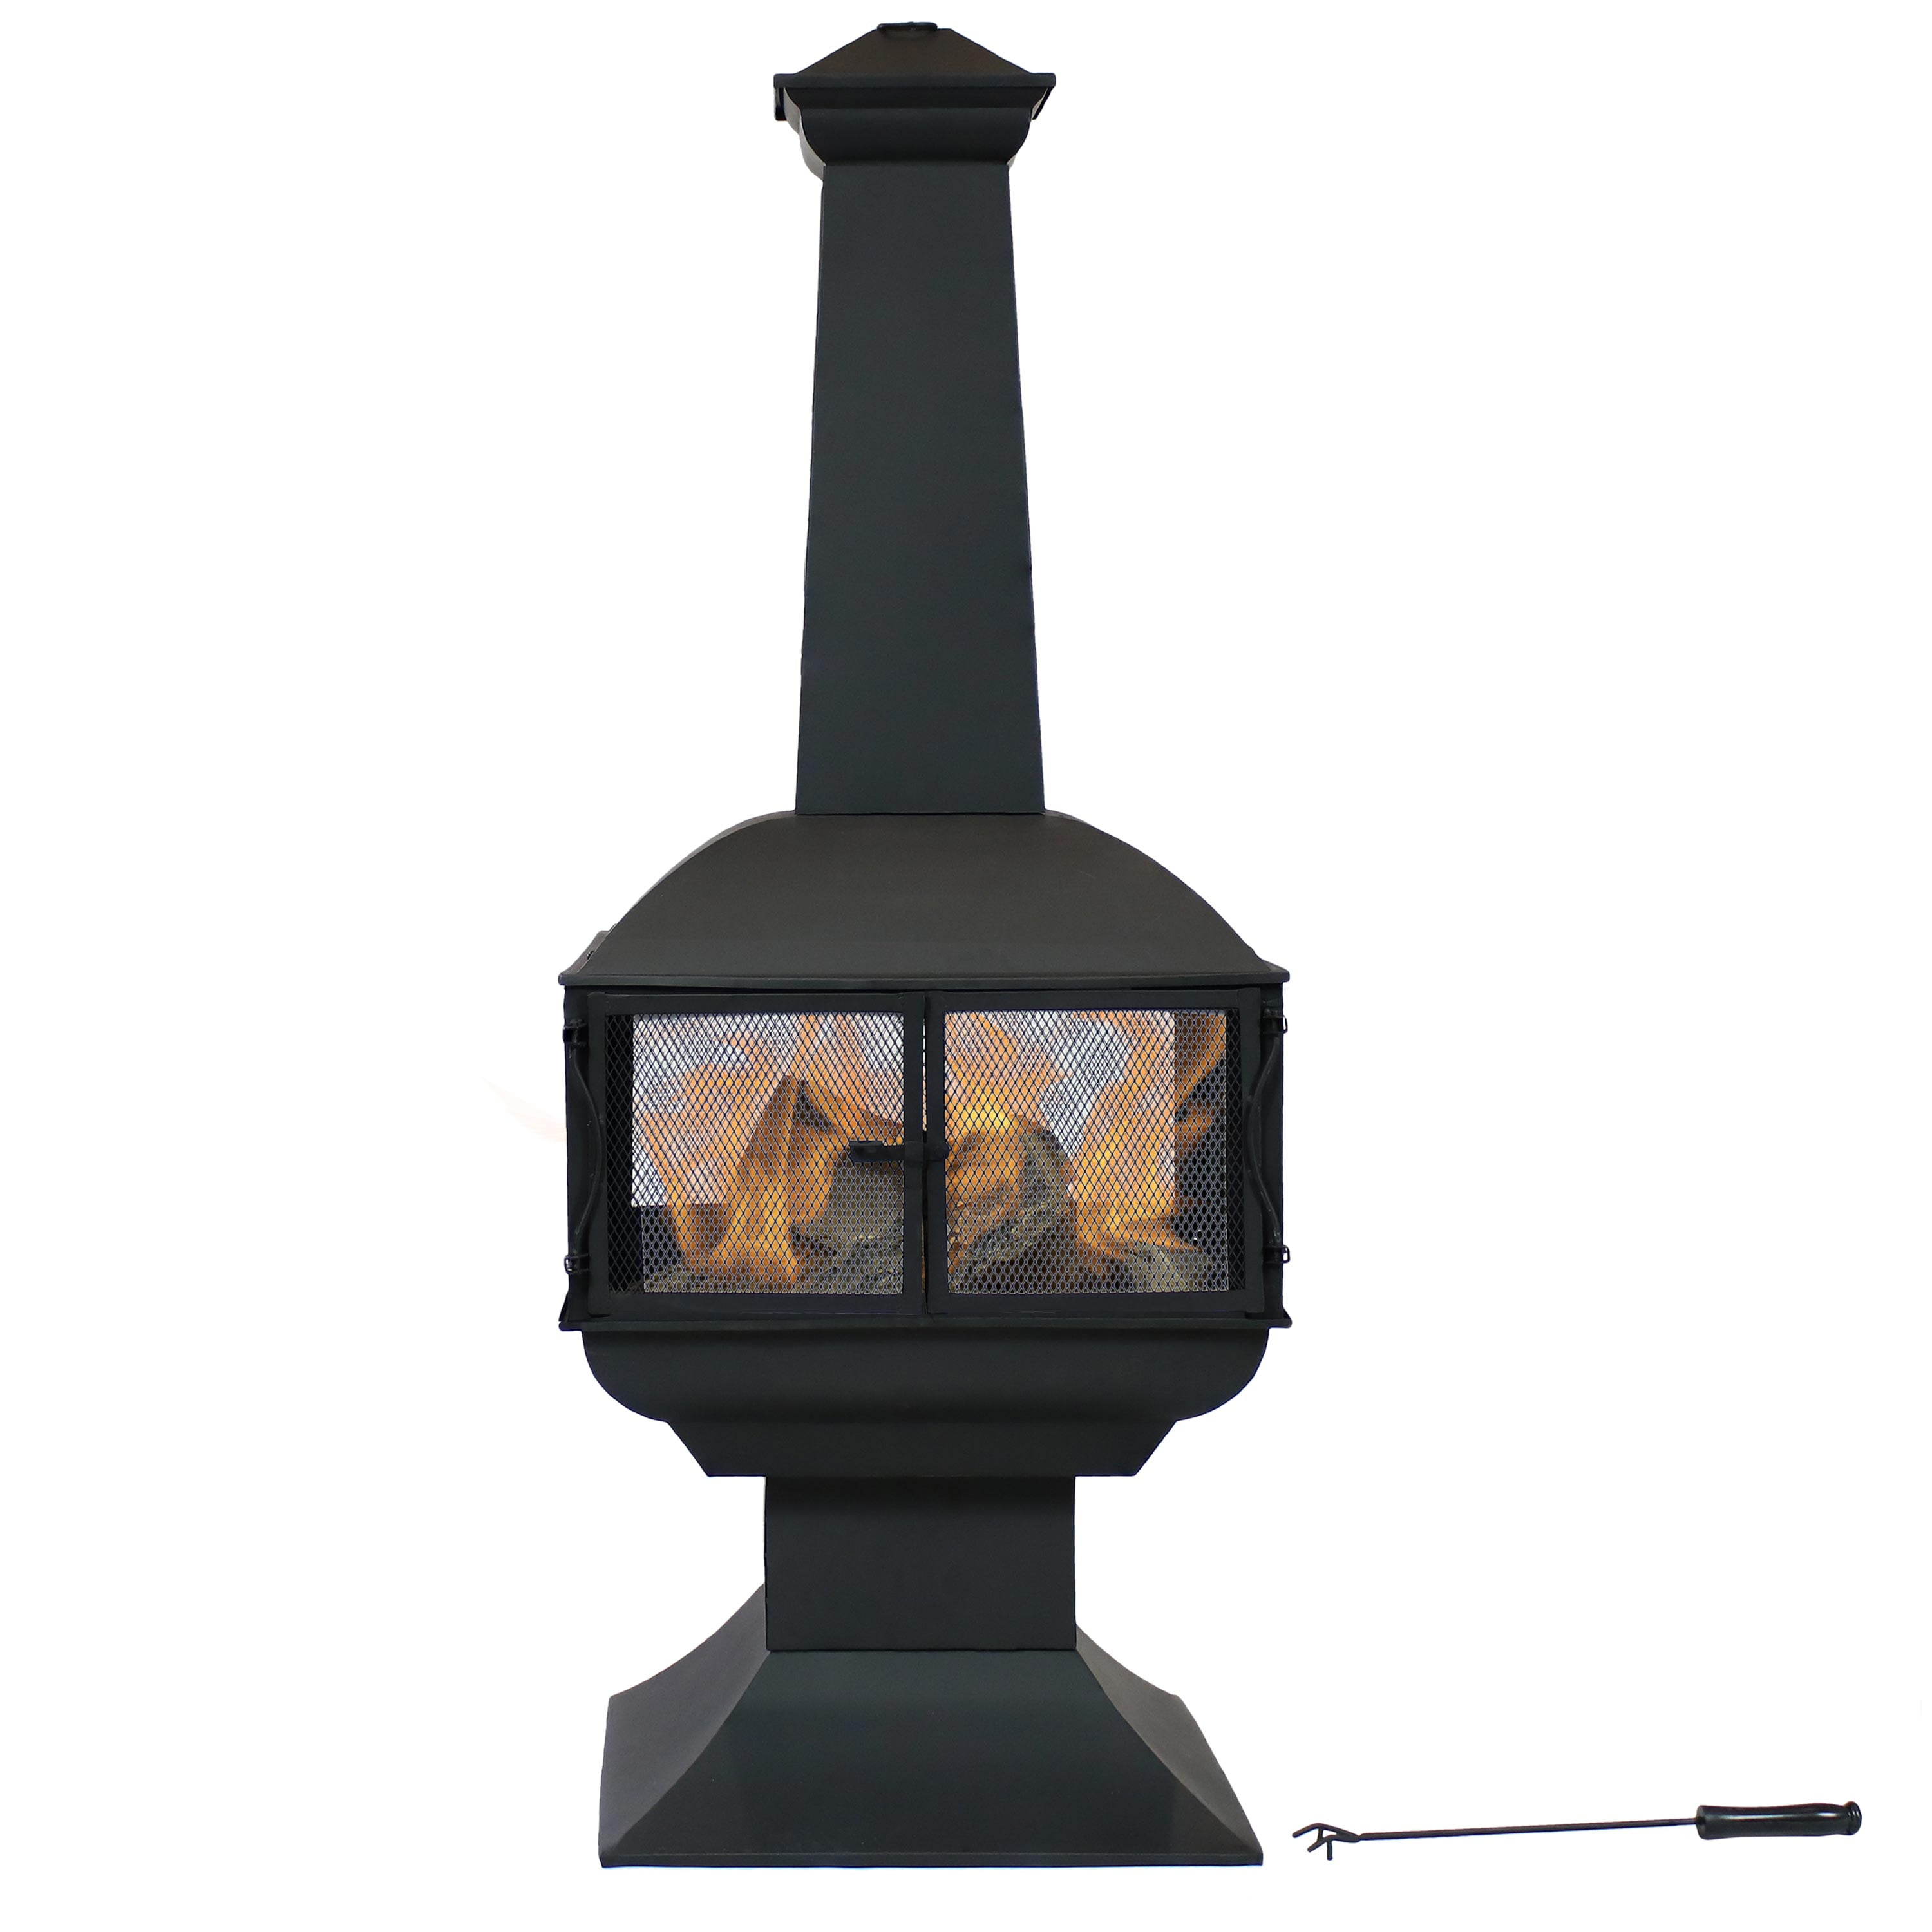 Sunnydaze 57 Chiminea Wood Burning 360 Degree Fire Pit Steel With Black Finish Walmart Com